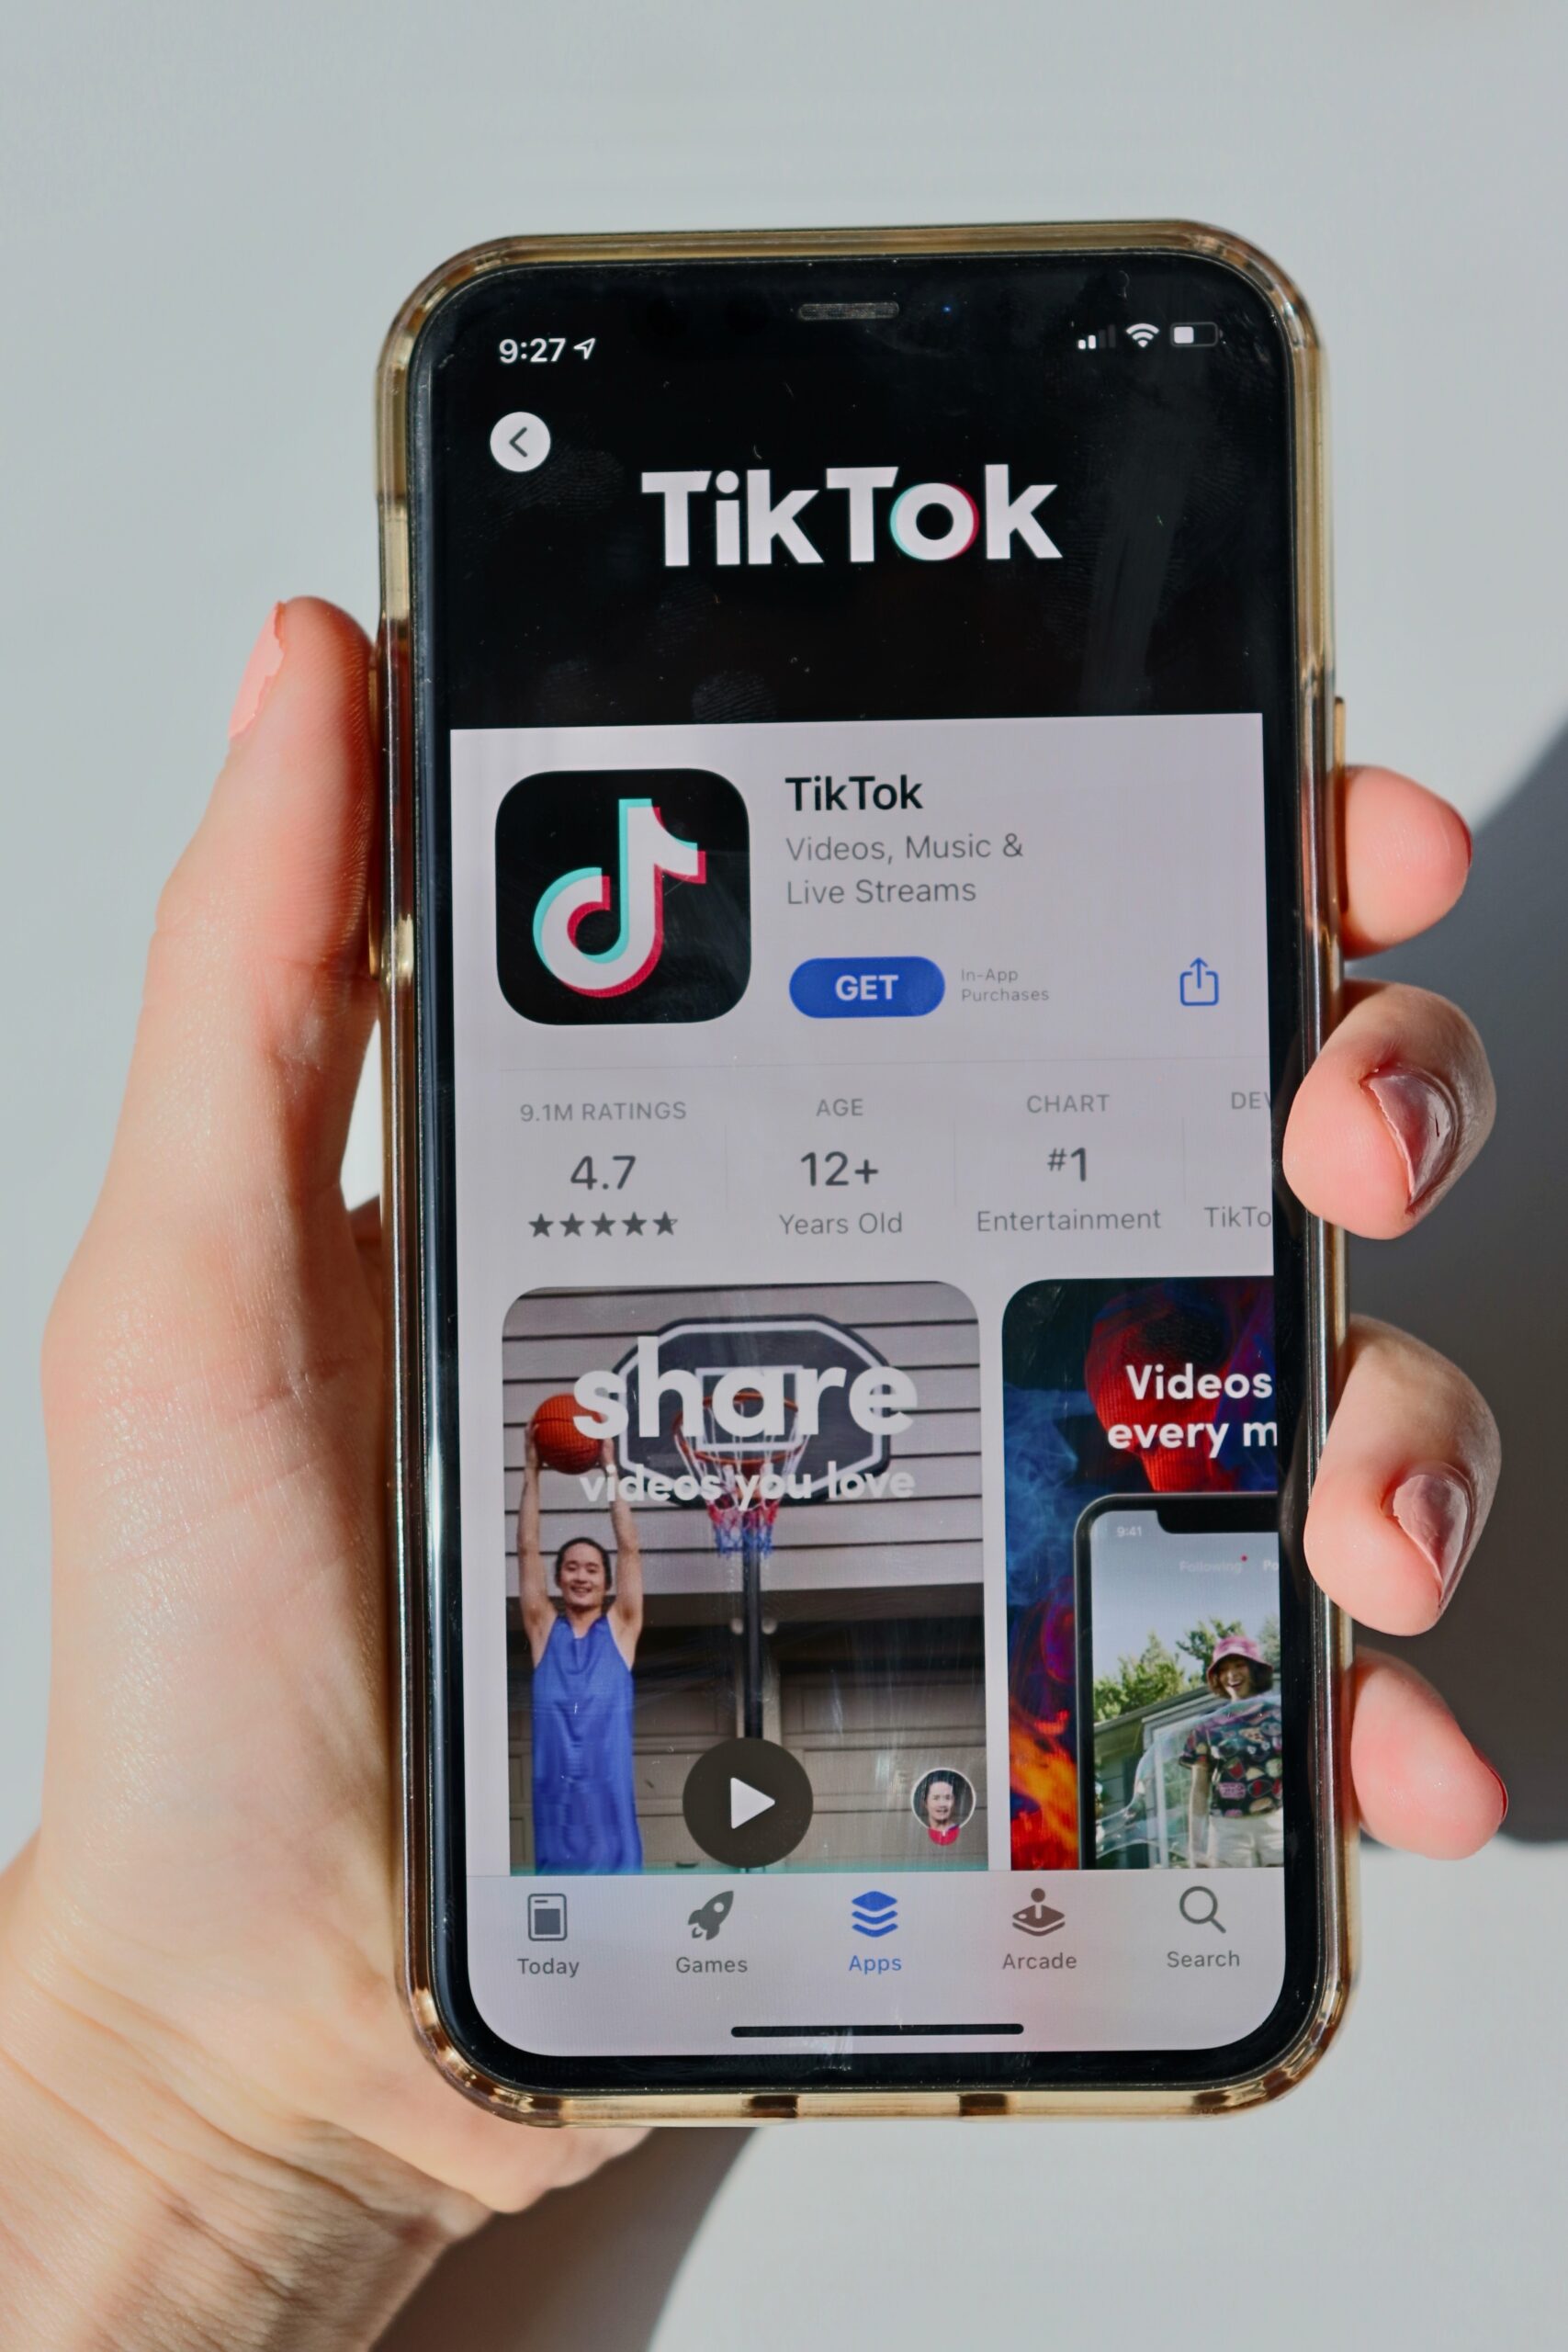 New TikTok features